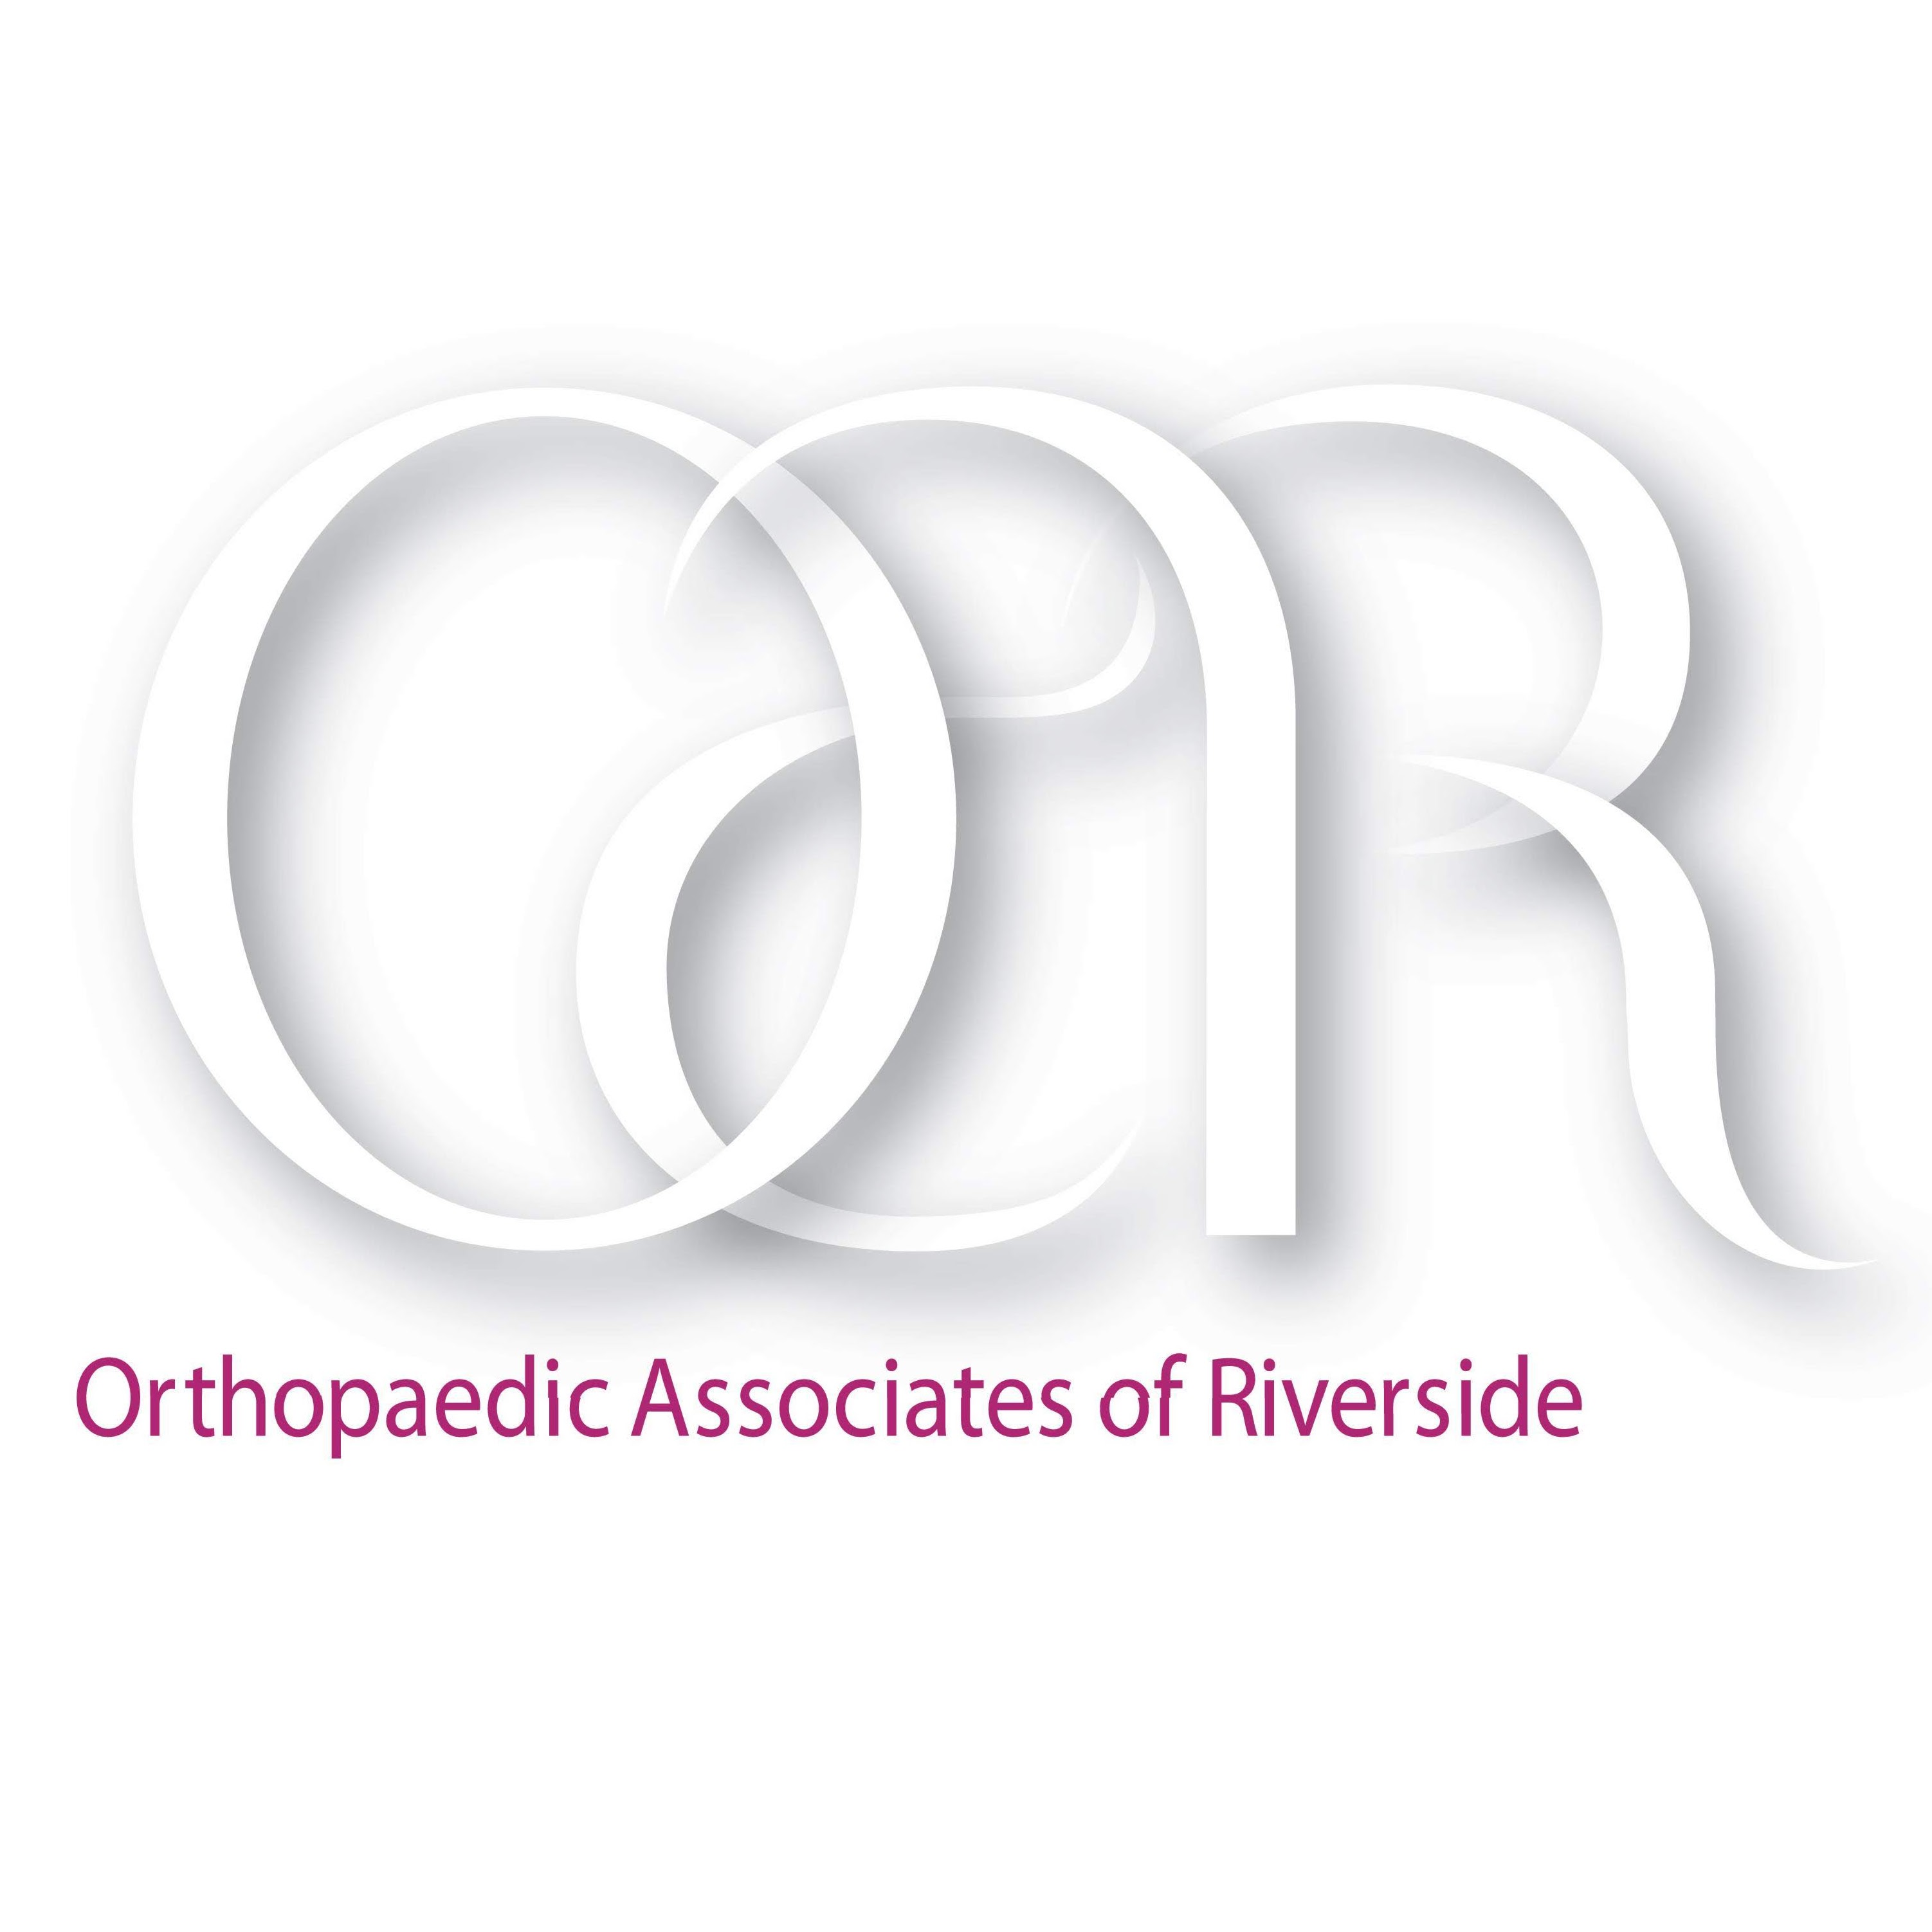 Orthopaedic Associates of Riverside - La Grange